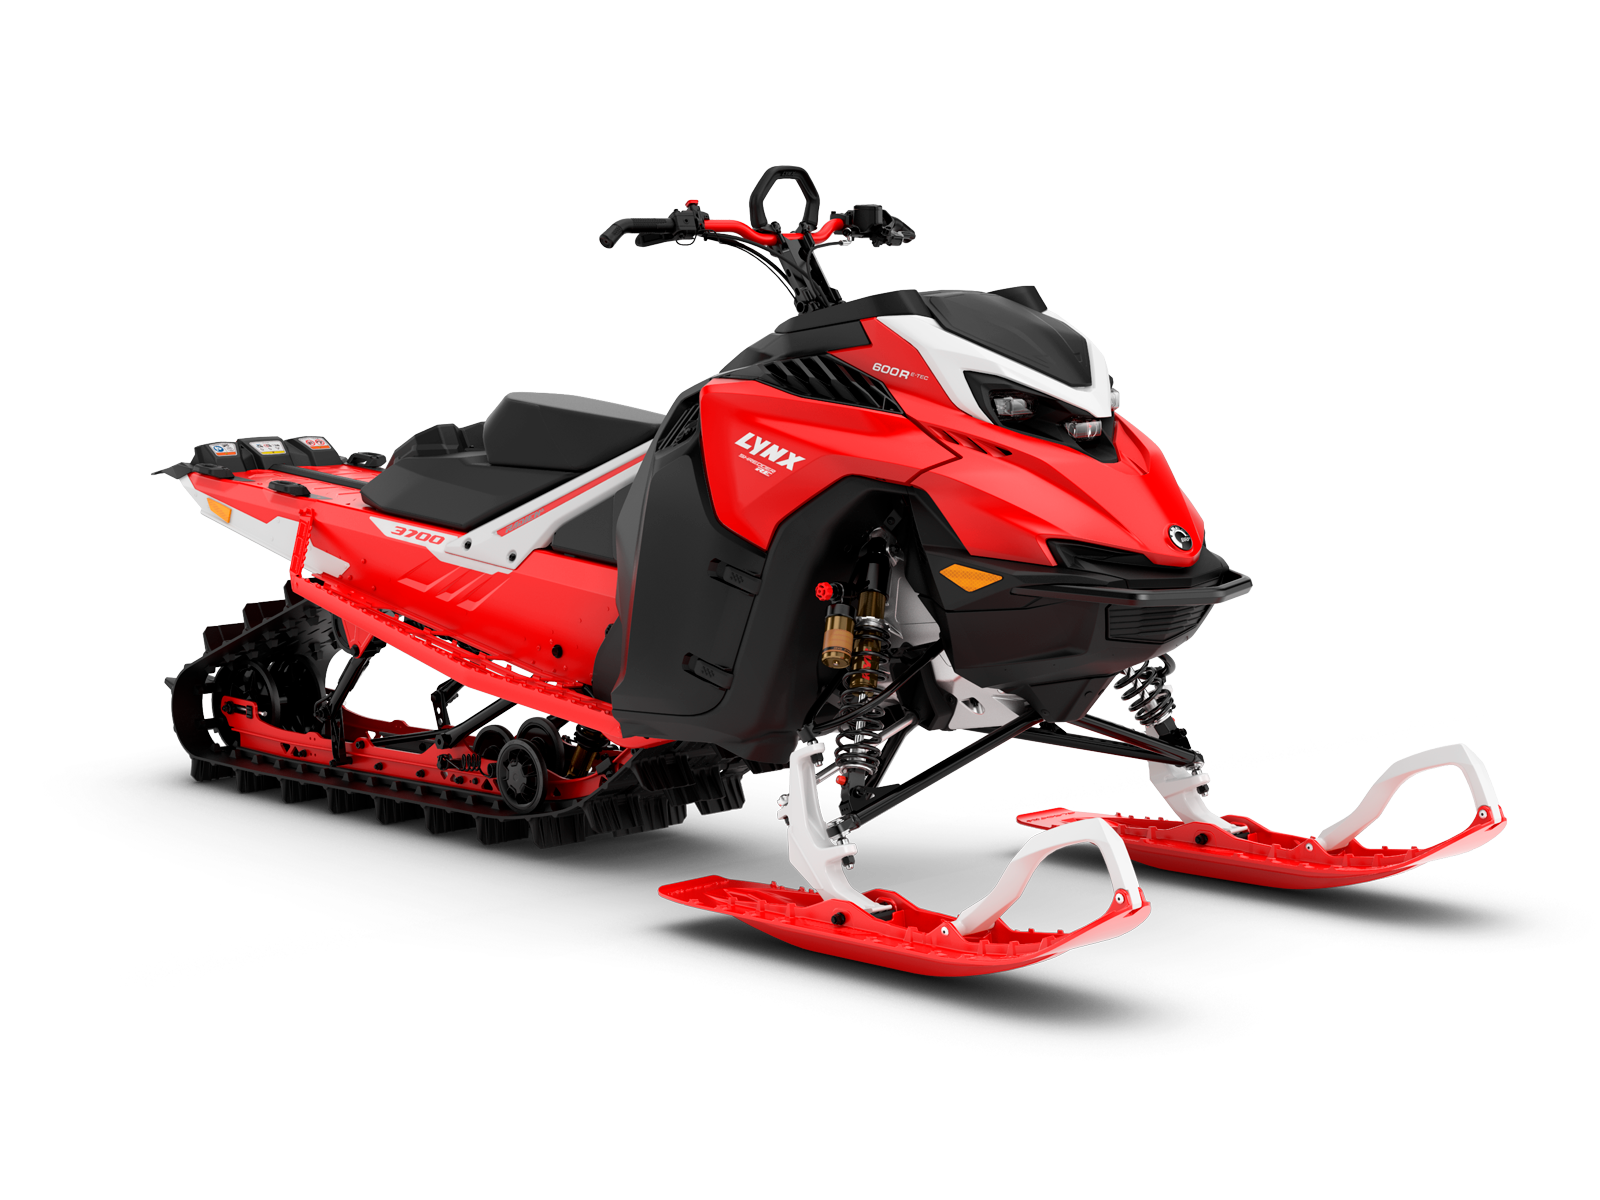 Lynx Shredder RE 600R E-TEC snowmobile